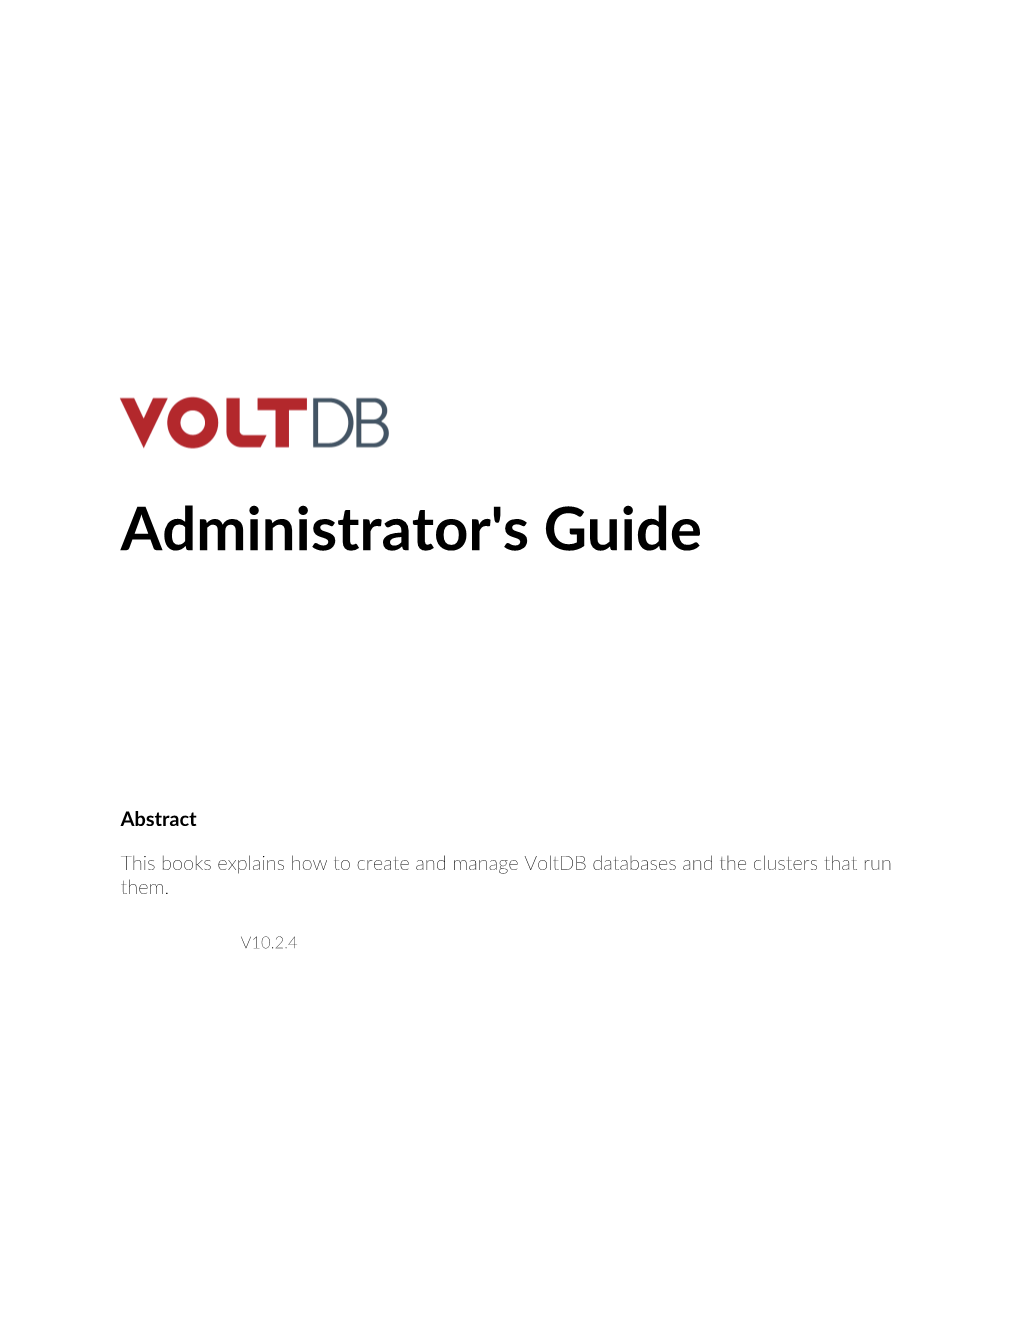 Administrator's Guide